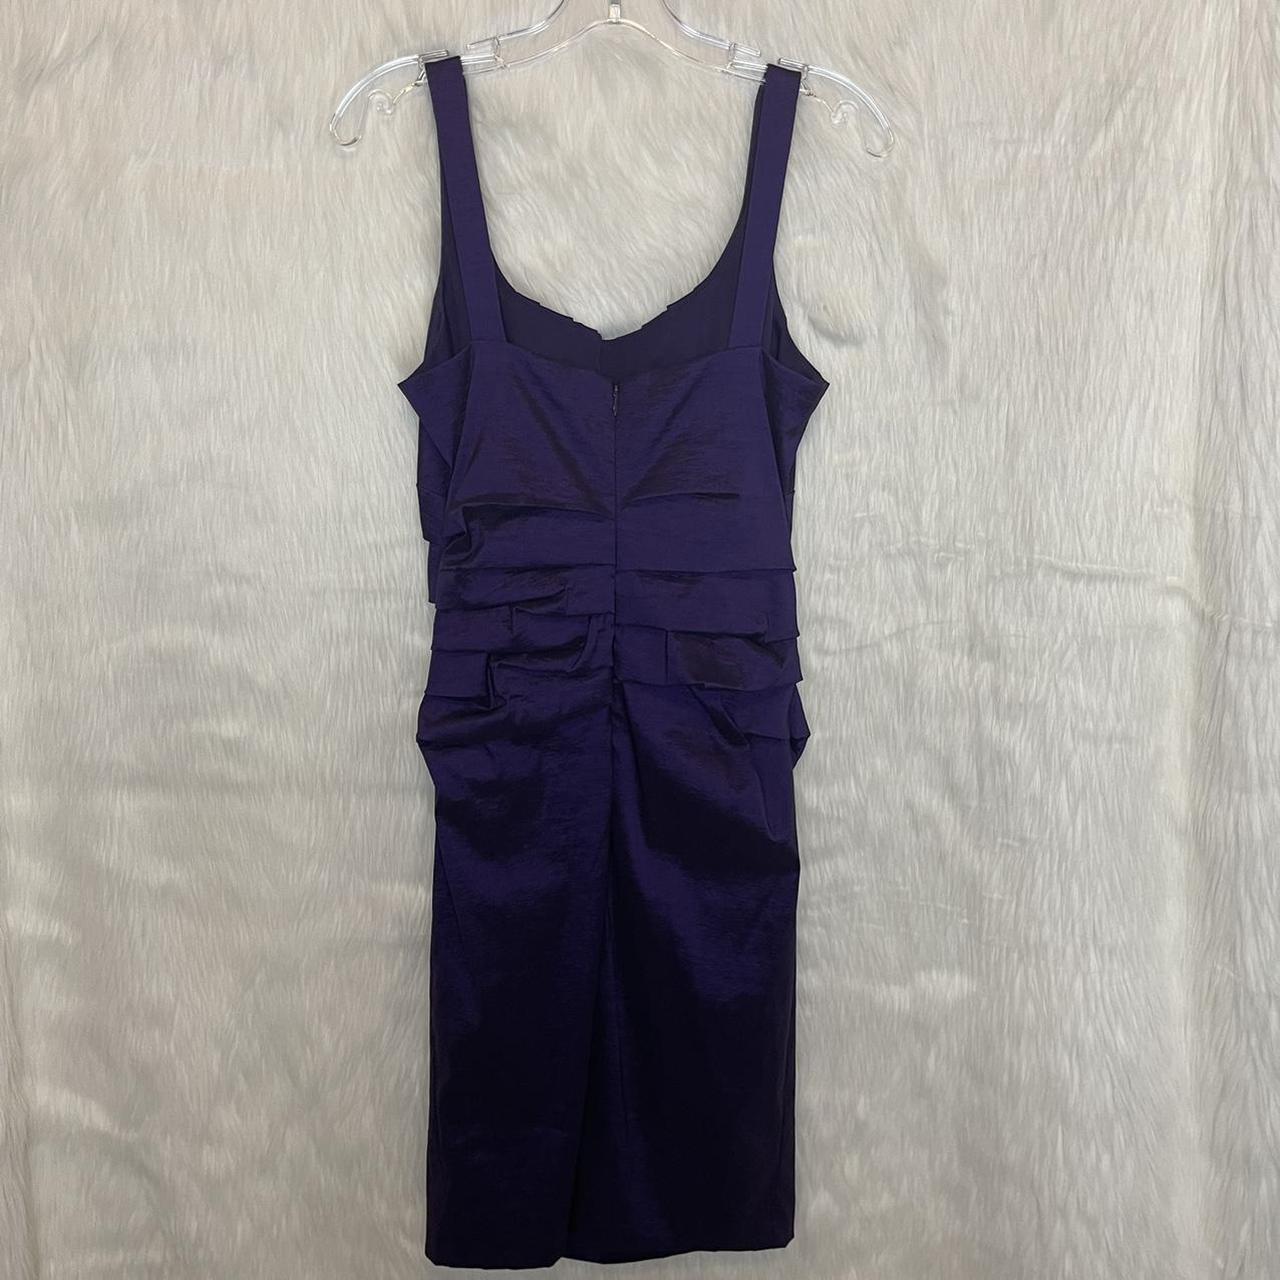 NWT S.L. Fashions (JC Pennys) purple cocktail dress.... - Depop